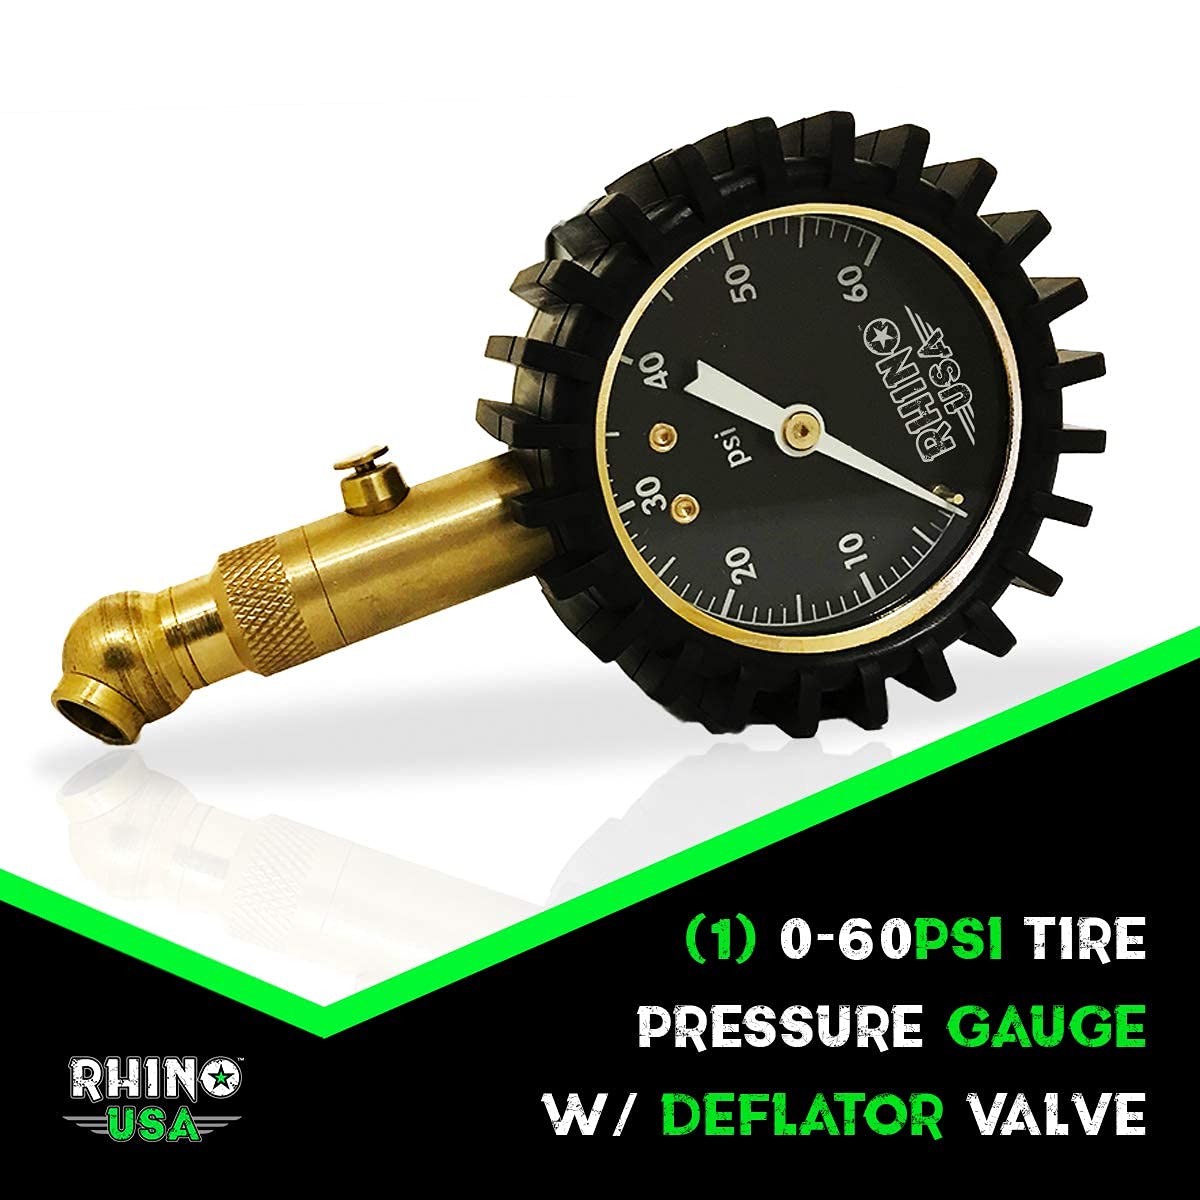 RHINO USA Heavy Duty Tire Pressure Gauge (0-75 PSI) - Certified ANSI B40.1  Accurate, Large 2